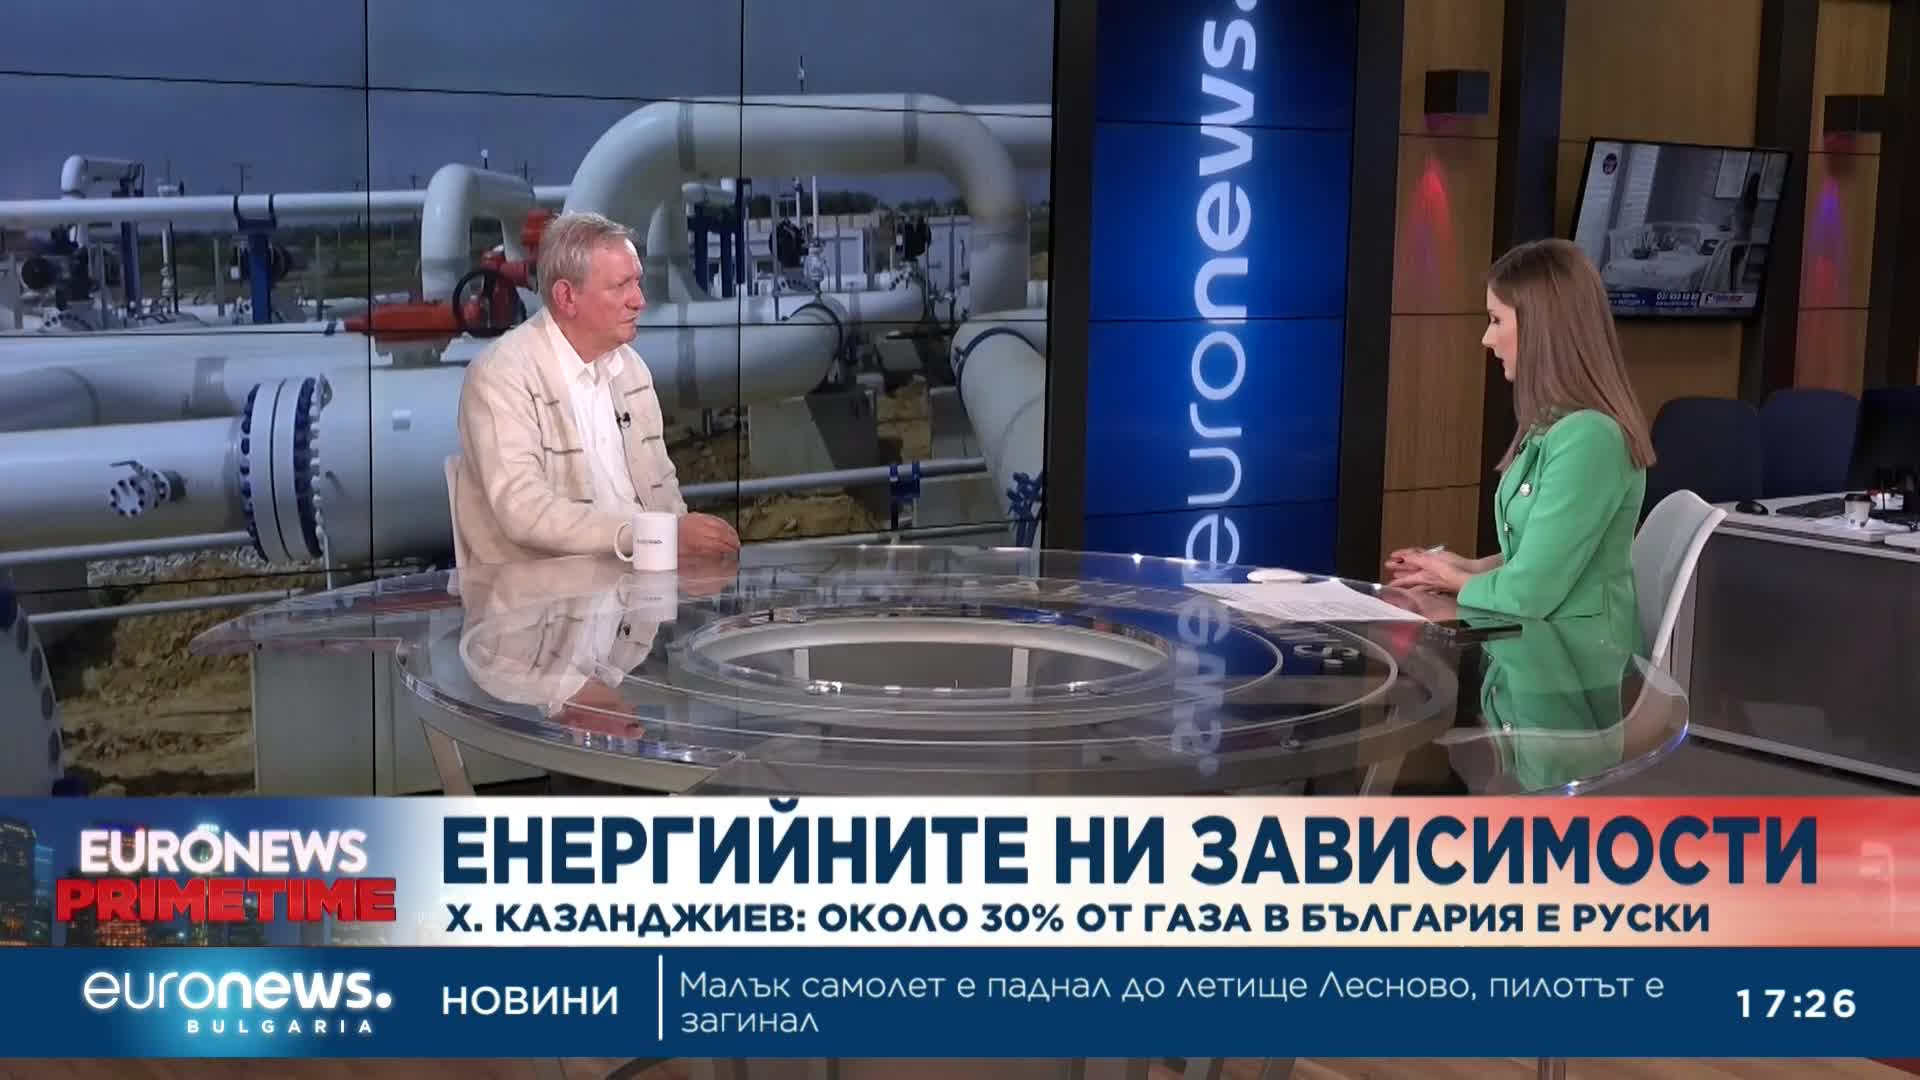 Христо Казанджиев, енергиен експерт: Около 30-35% от природния газ идва от Русия